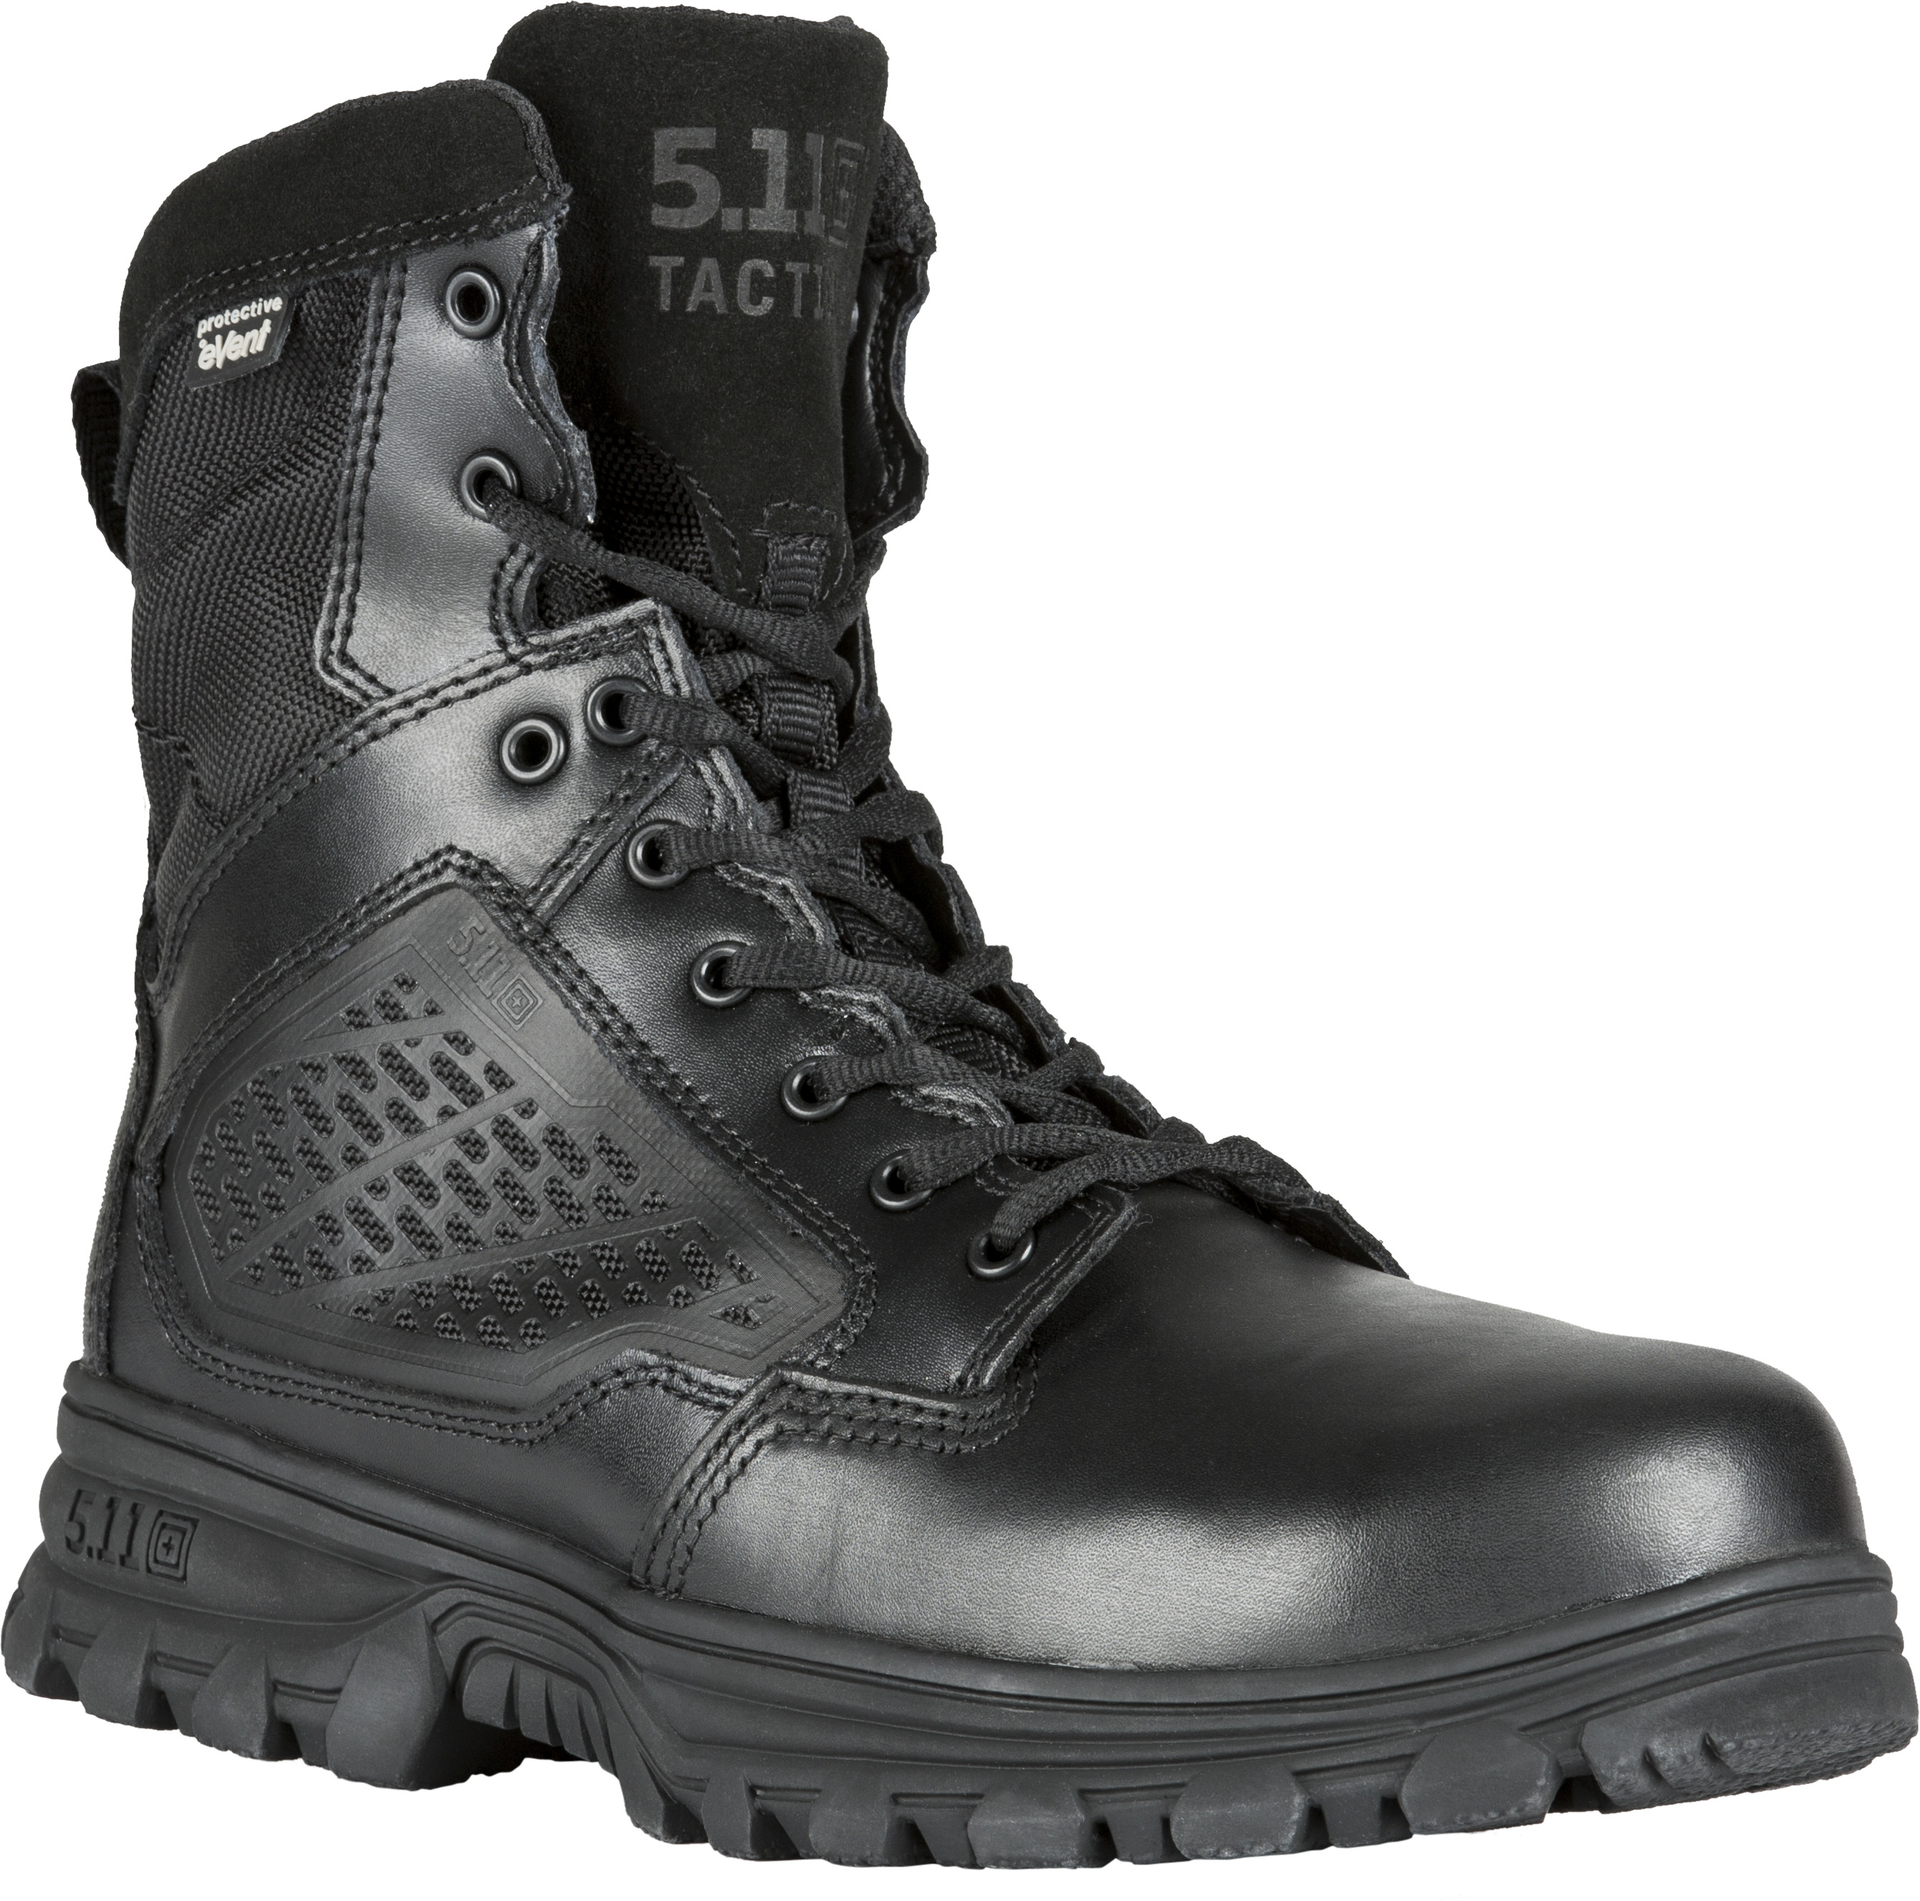 5.11 tactical boots waterproof